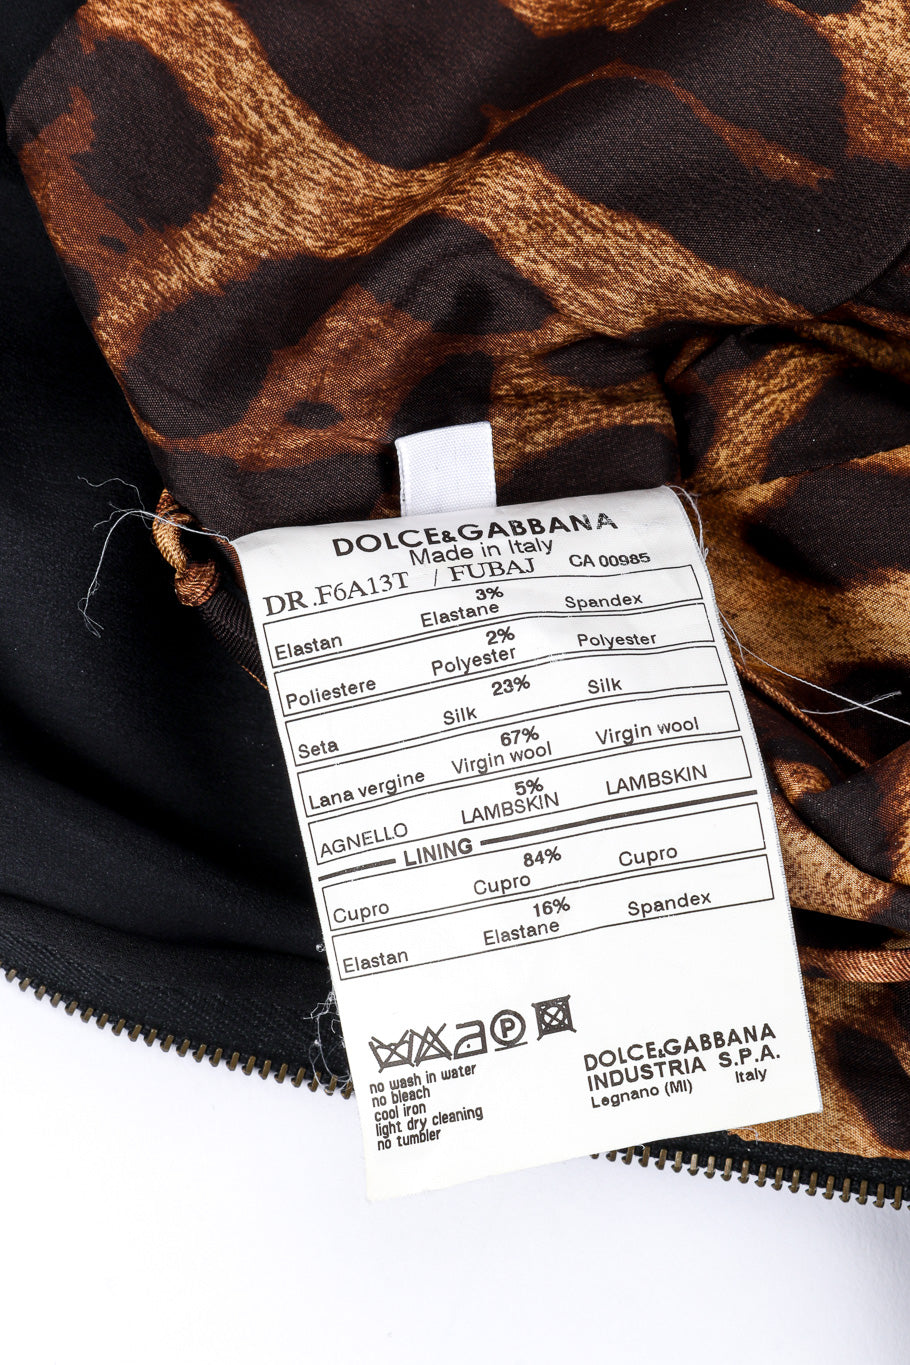 Dolce & Gabbana Metallic Trim Sheath Dress fabric content label closeup @recessla